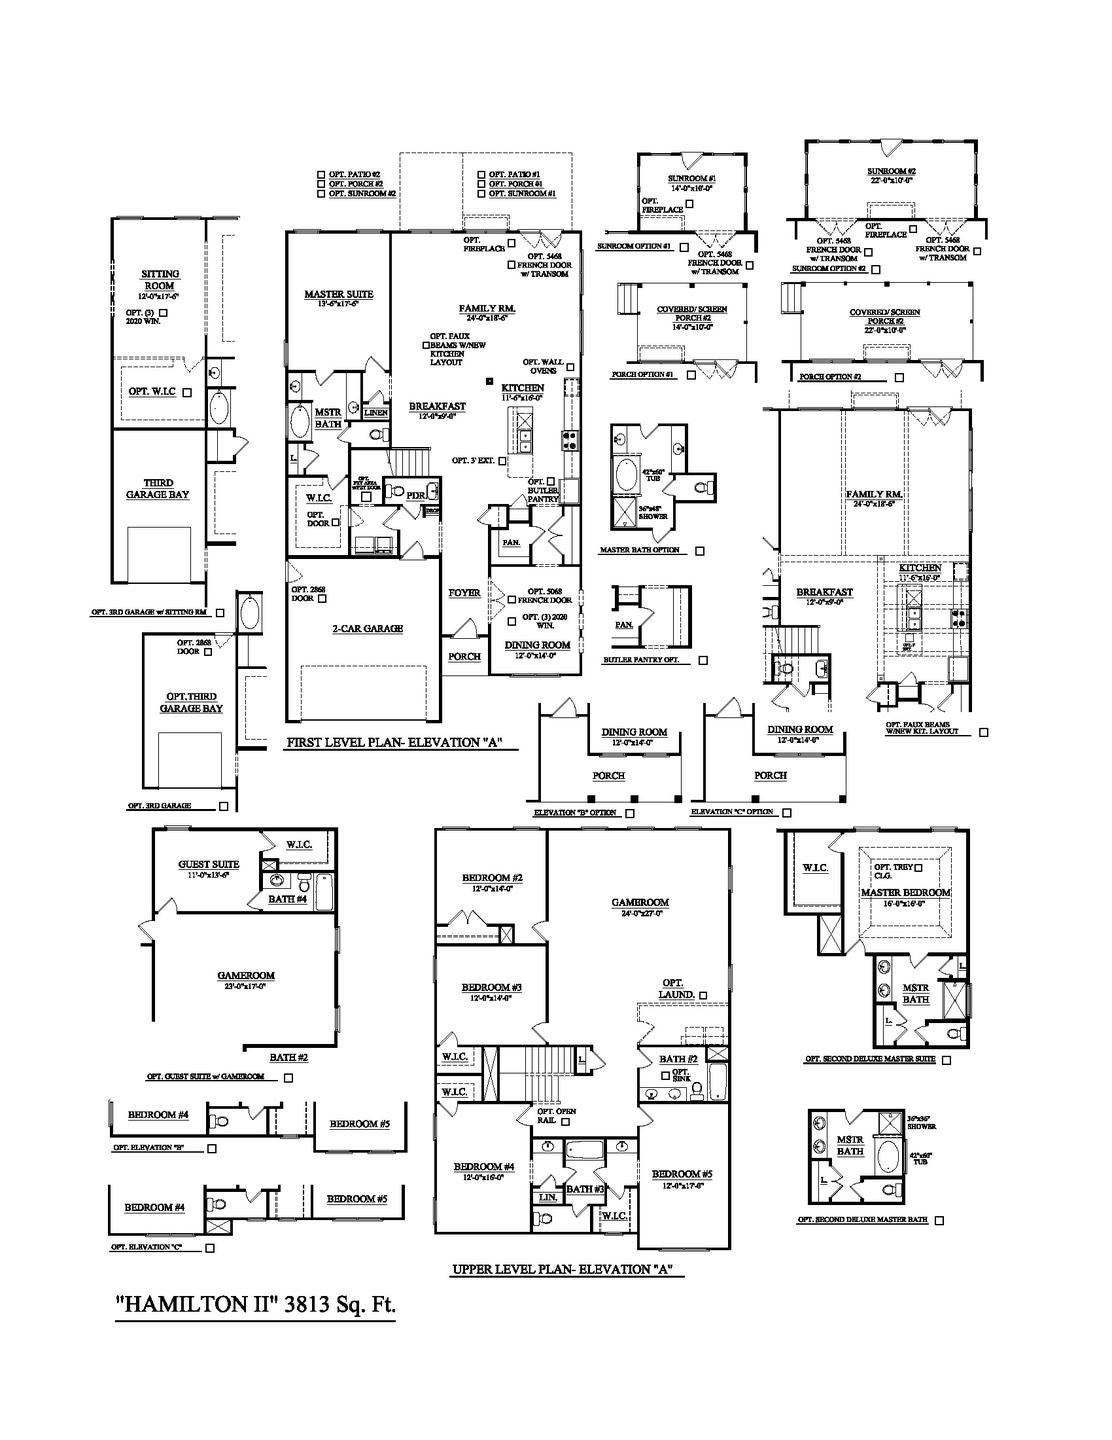 Hamilton II - Greenville New Home Floorplan